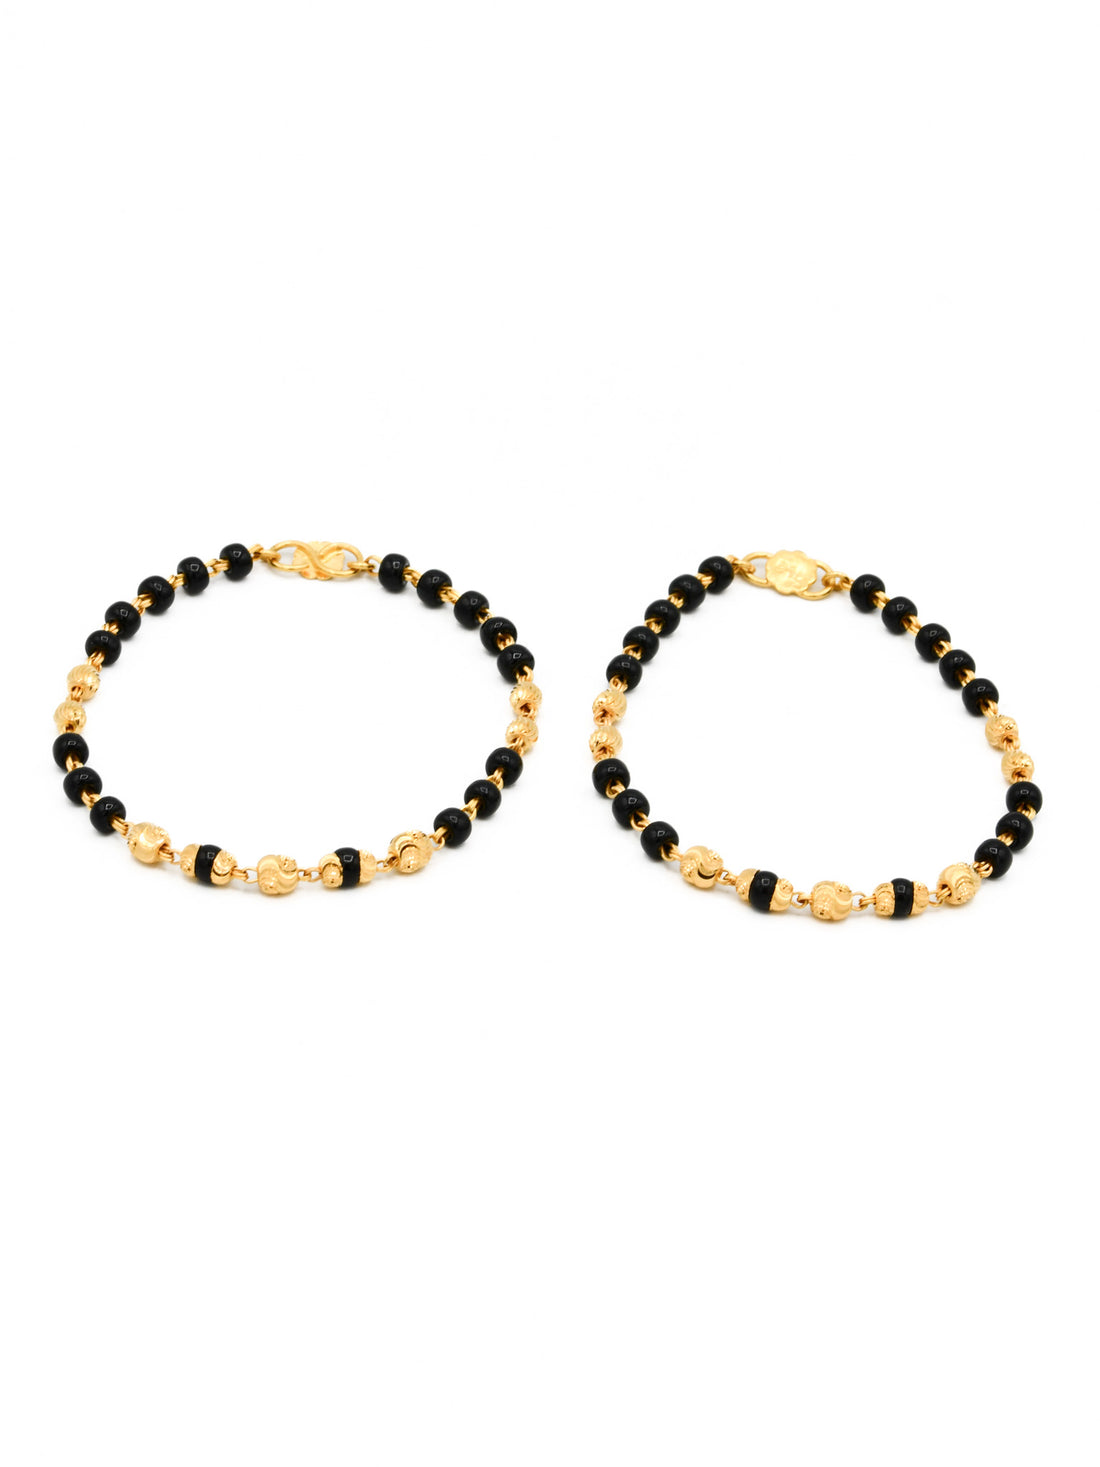 22ct Gold Ball Black beads Pair Baby Bracelet